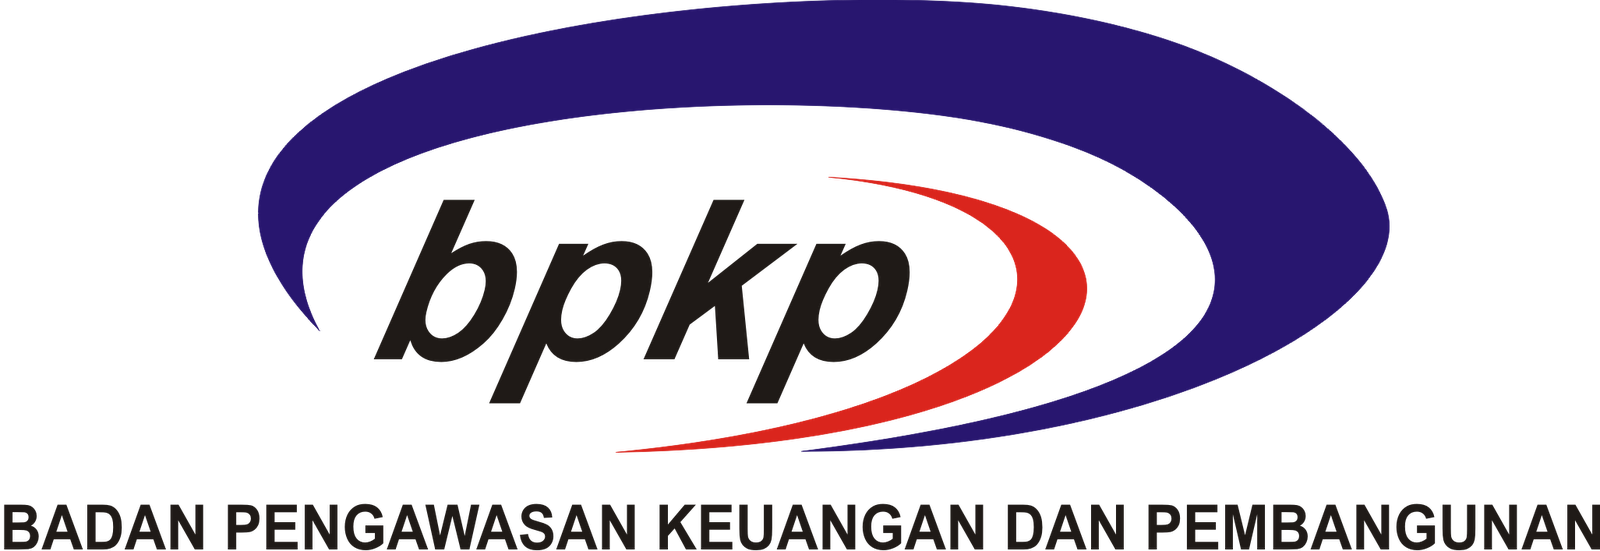 Logo BPKP - Kumpulan Logo Indonesia